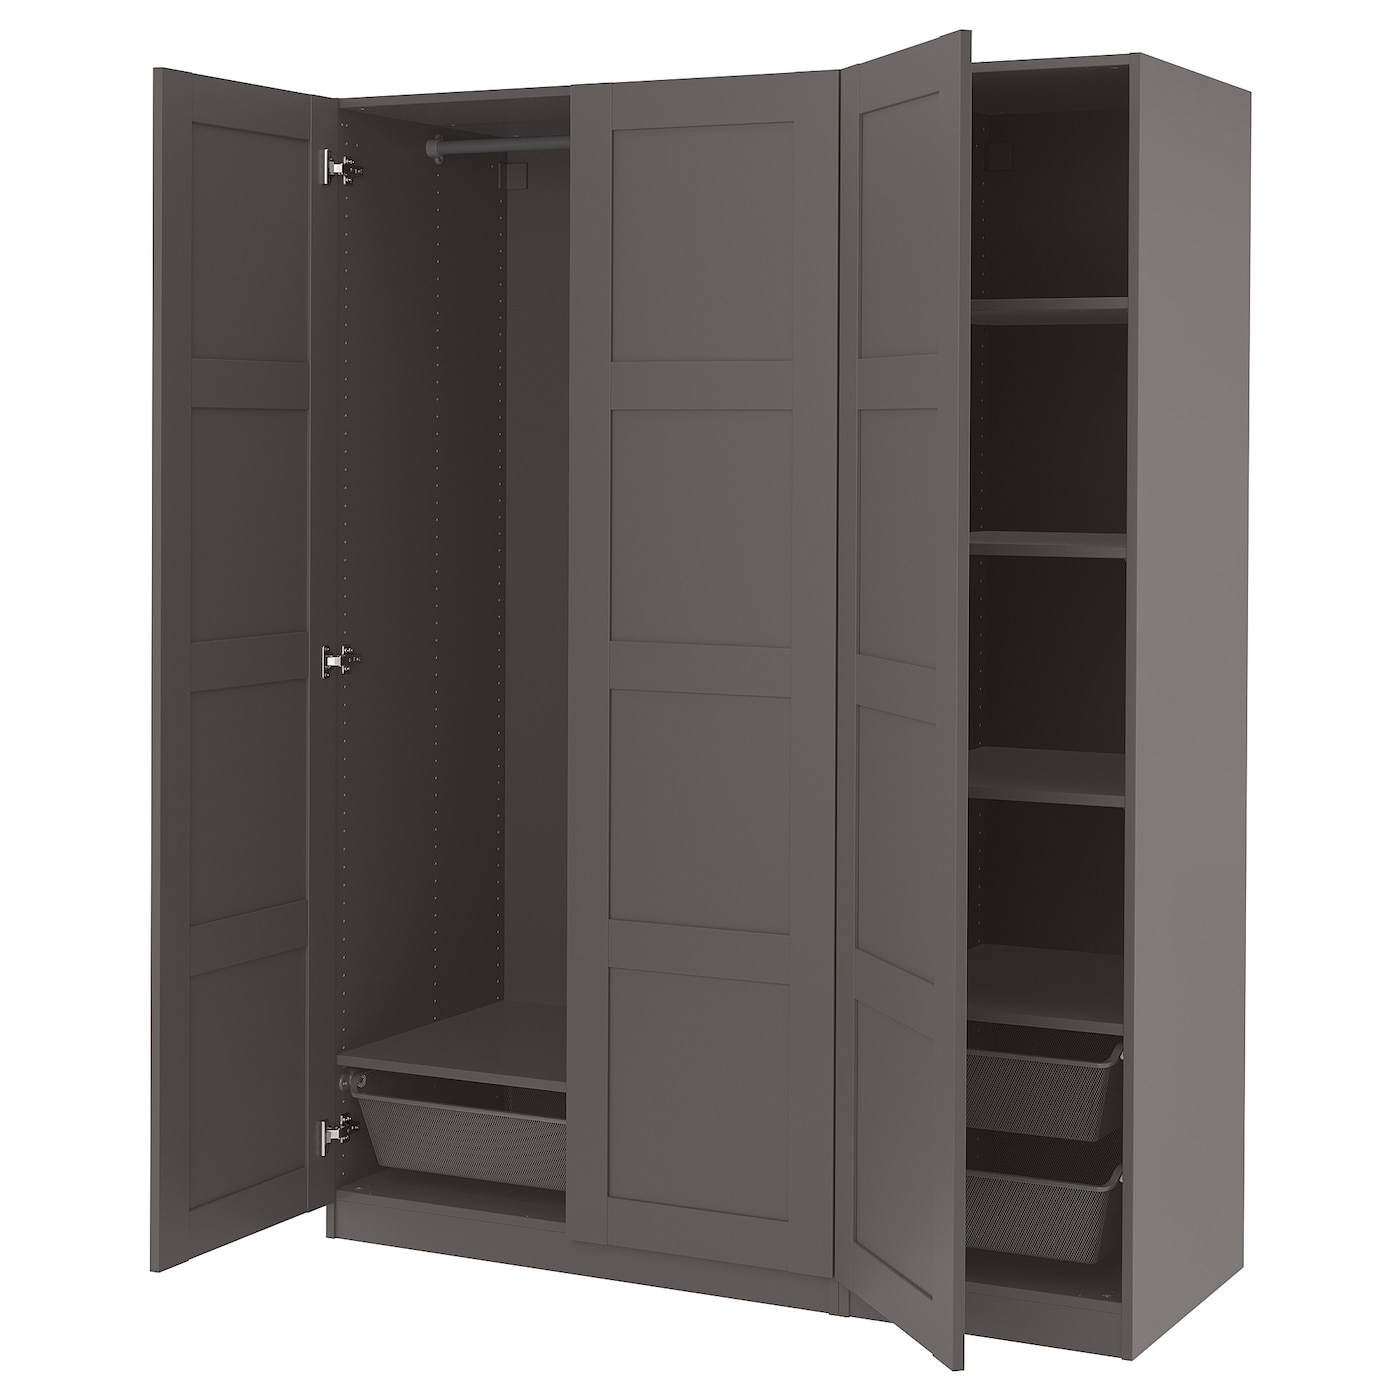 Платяной шкаф - IKEA PAX/BERGSBO/ПАКС/БЕРГСБУ ИКЕА, 150x60x201 см, темно-серый